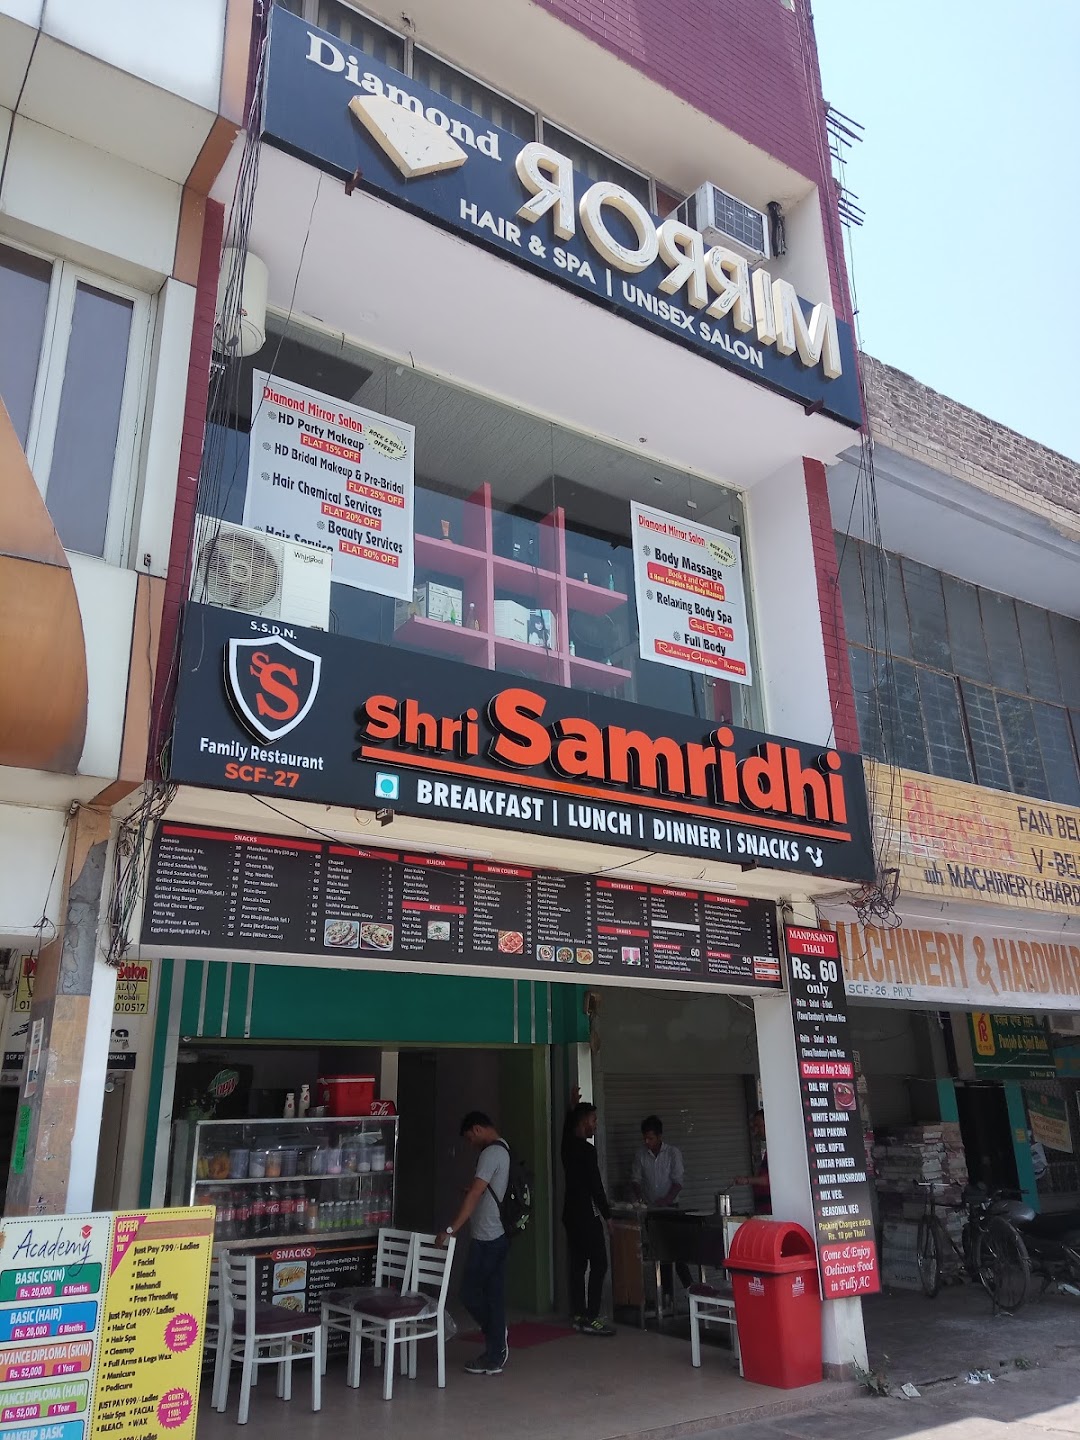 Shri Samridhi Family Restaurant